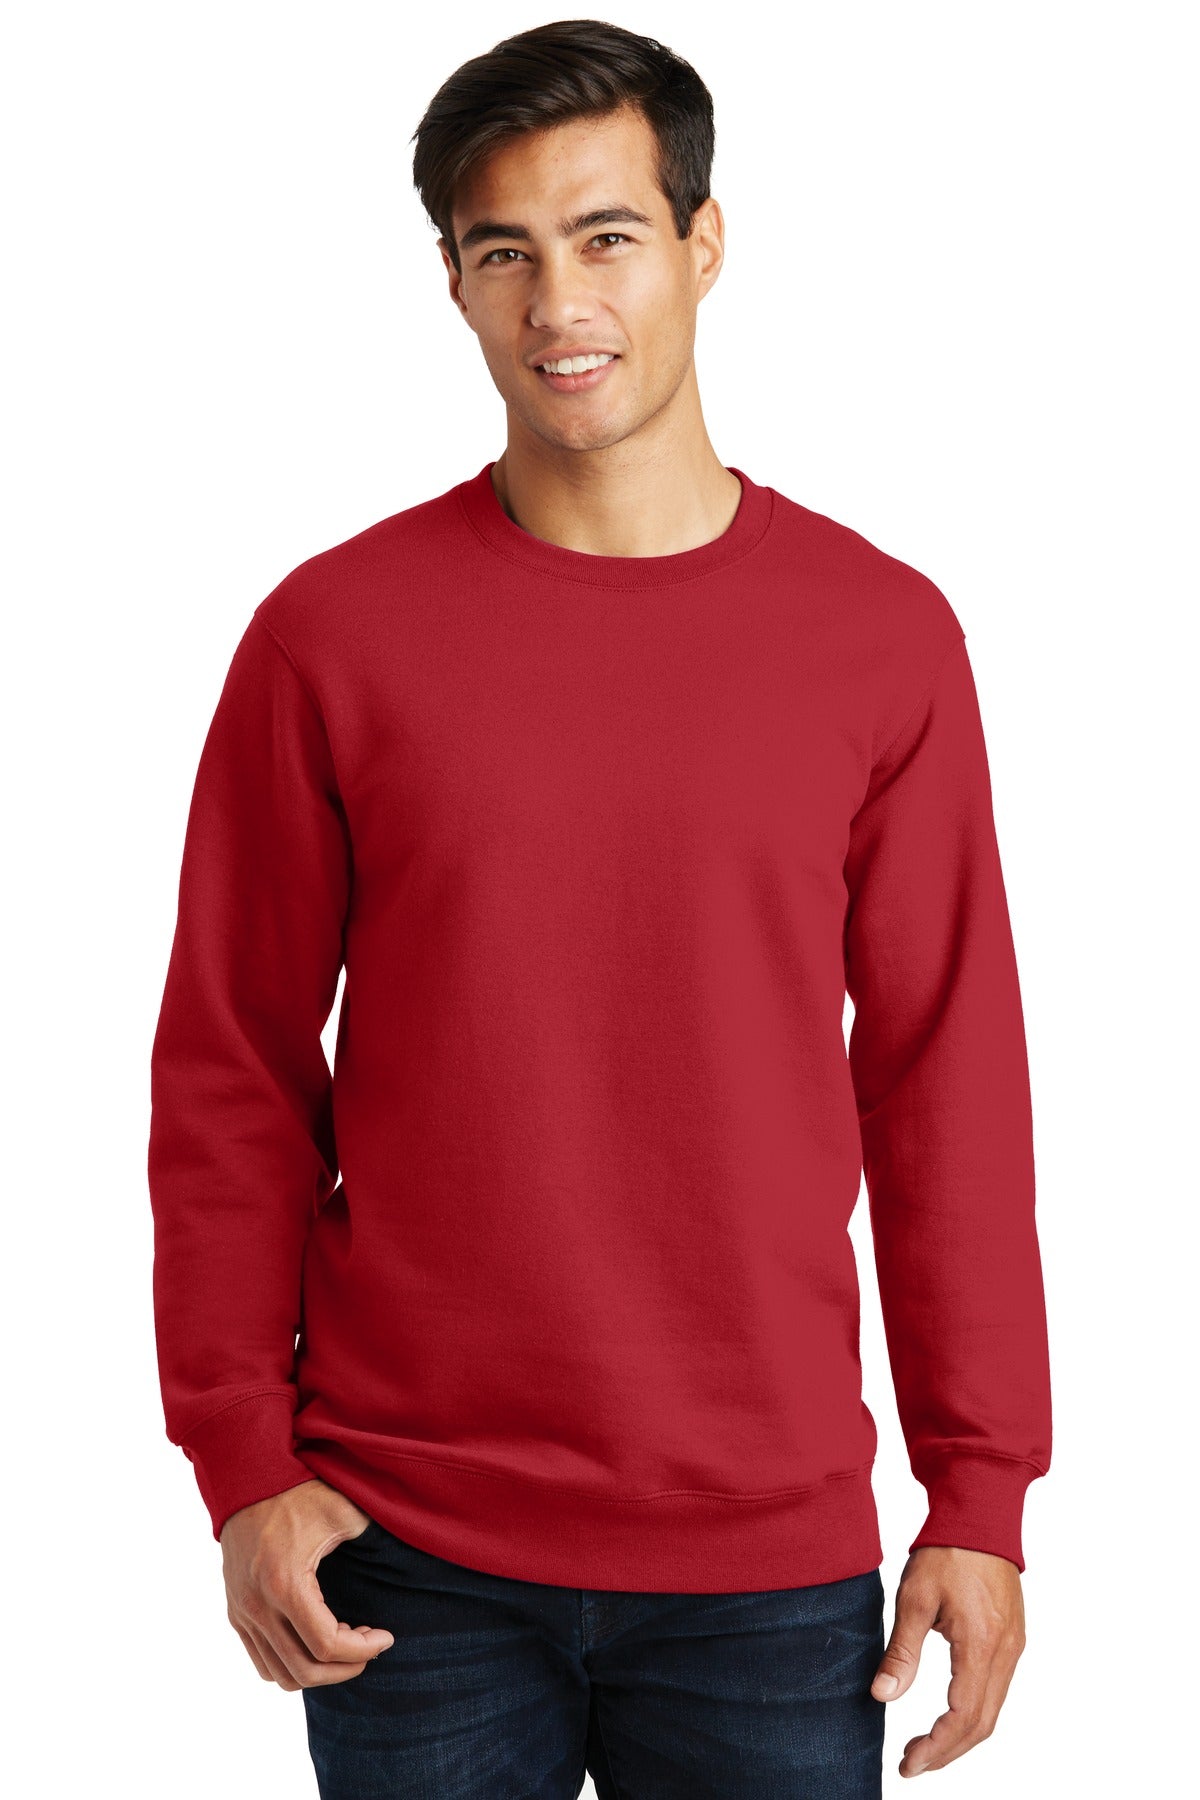 Port & Company® Fan Favorite Fleece Crewneck Sweatshirt. PC850 [Team Cardinal] - DFW Impression